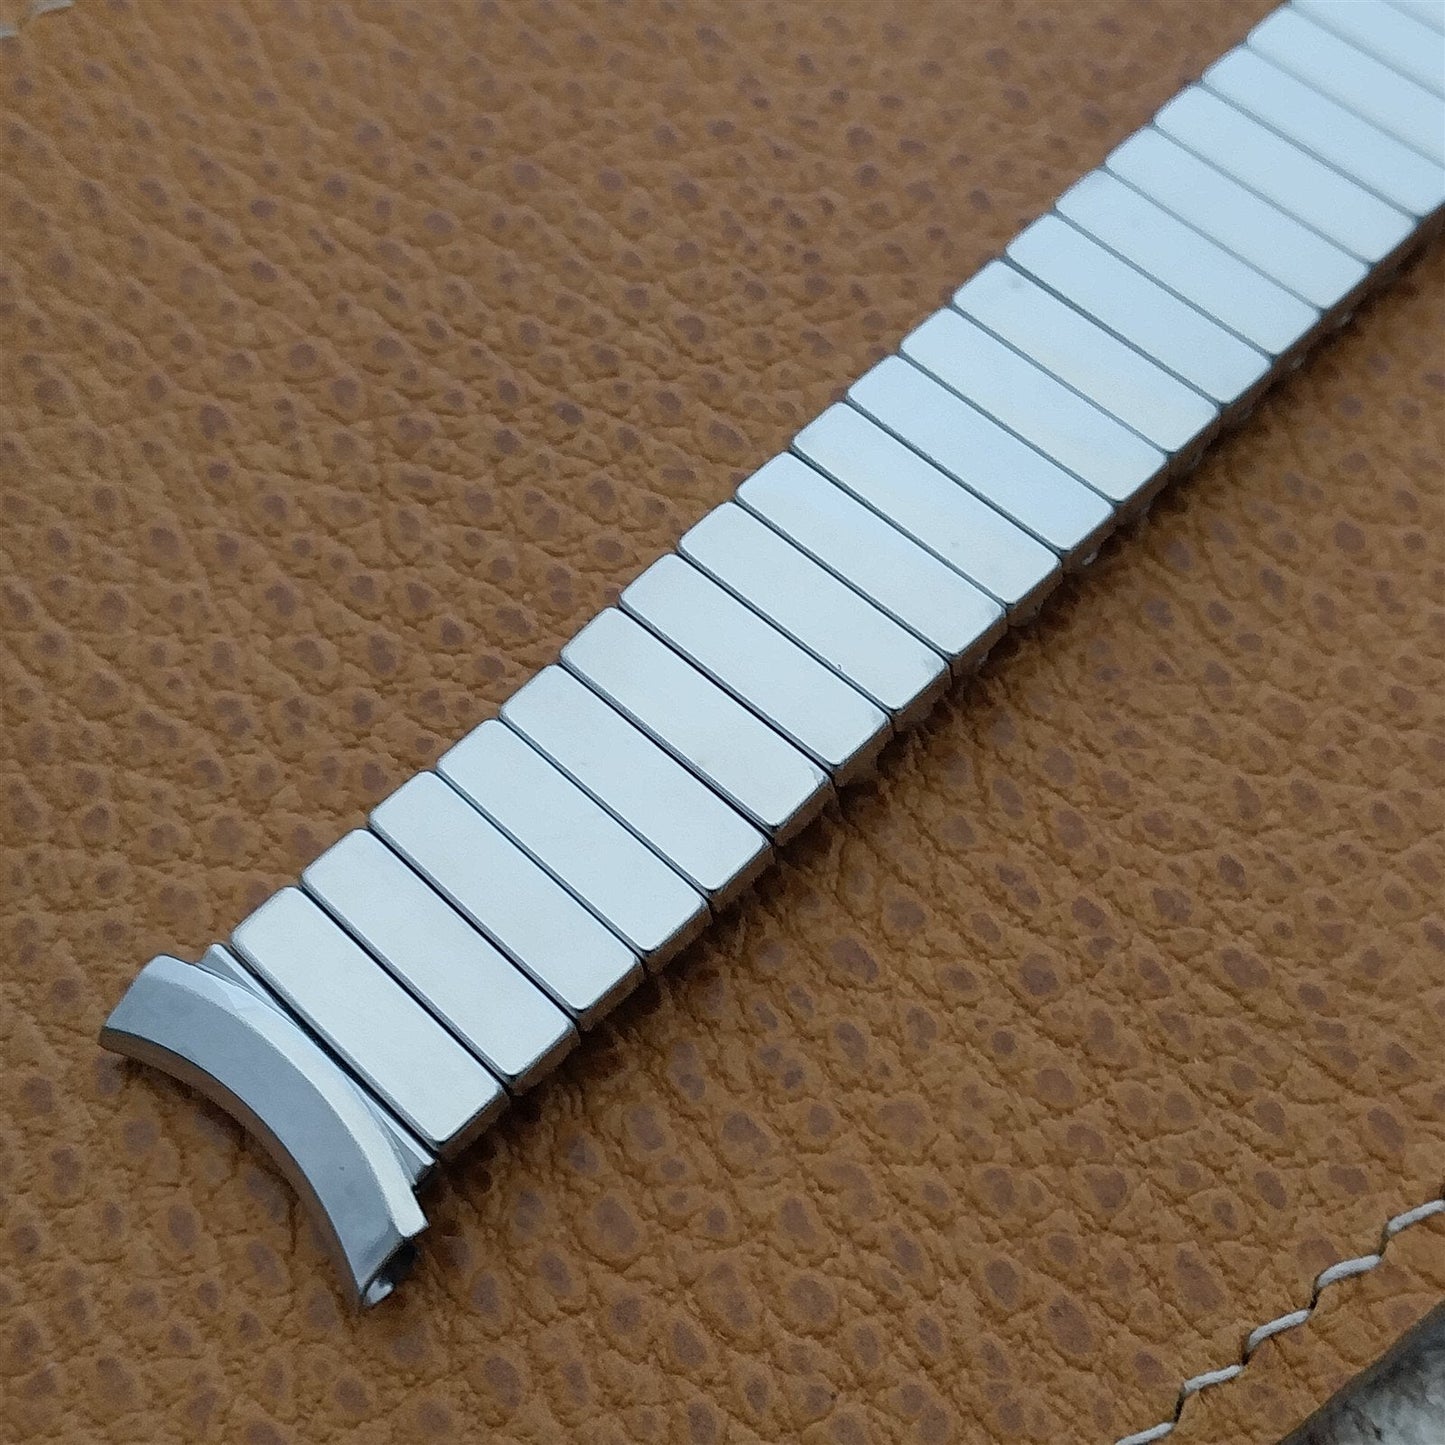 19mm 18mm Kreisler Stainless Steel Expansion Unused 1960s Vintage Watch Band